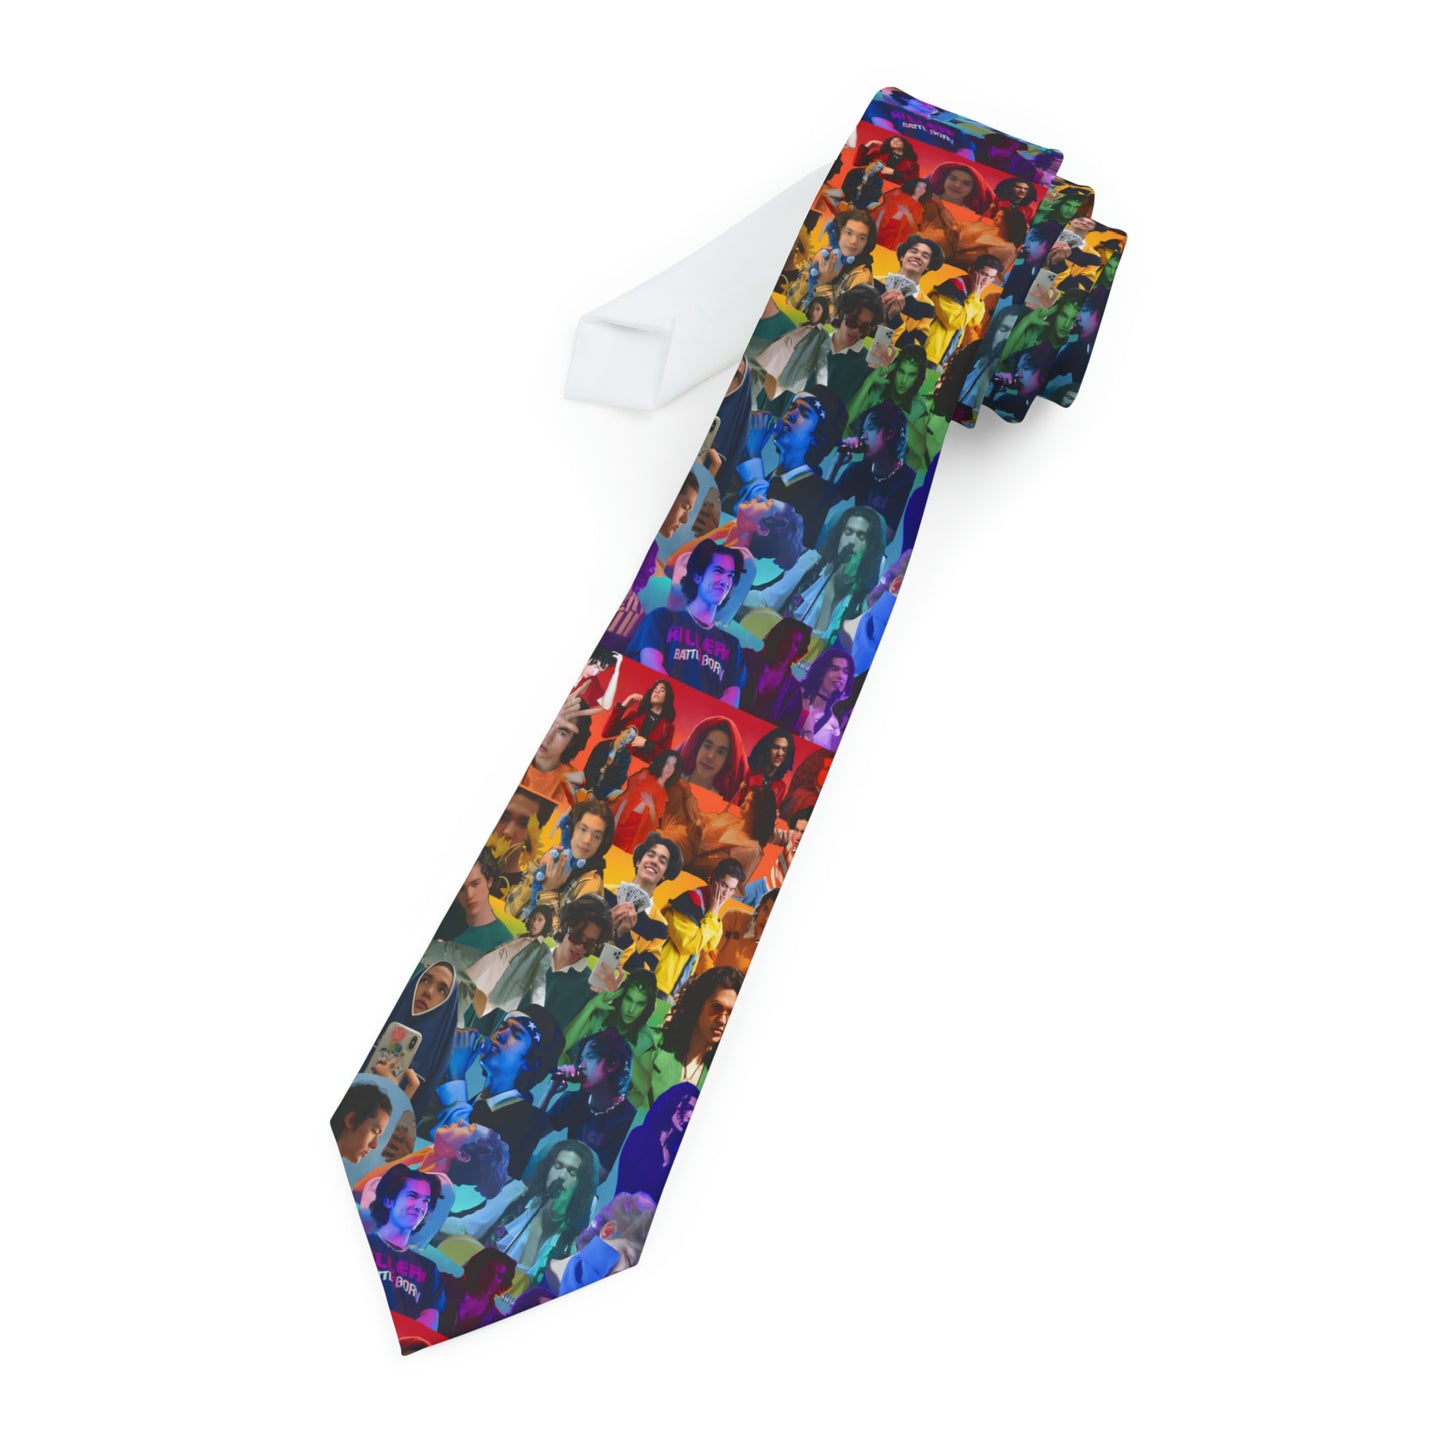 Conan Grey Rainbow Photo Collage Necktie